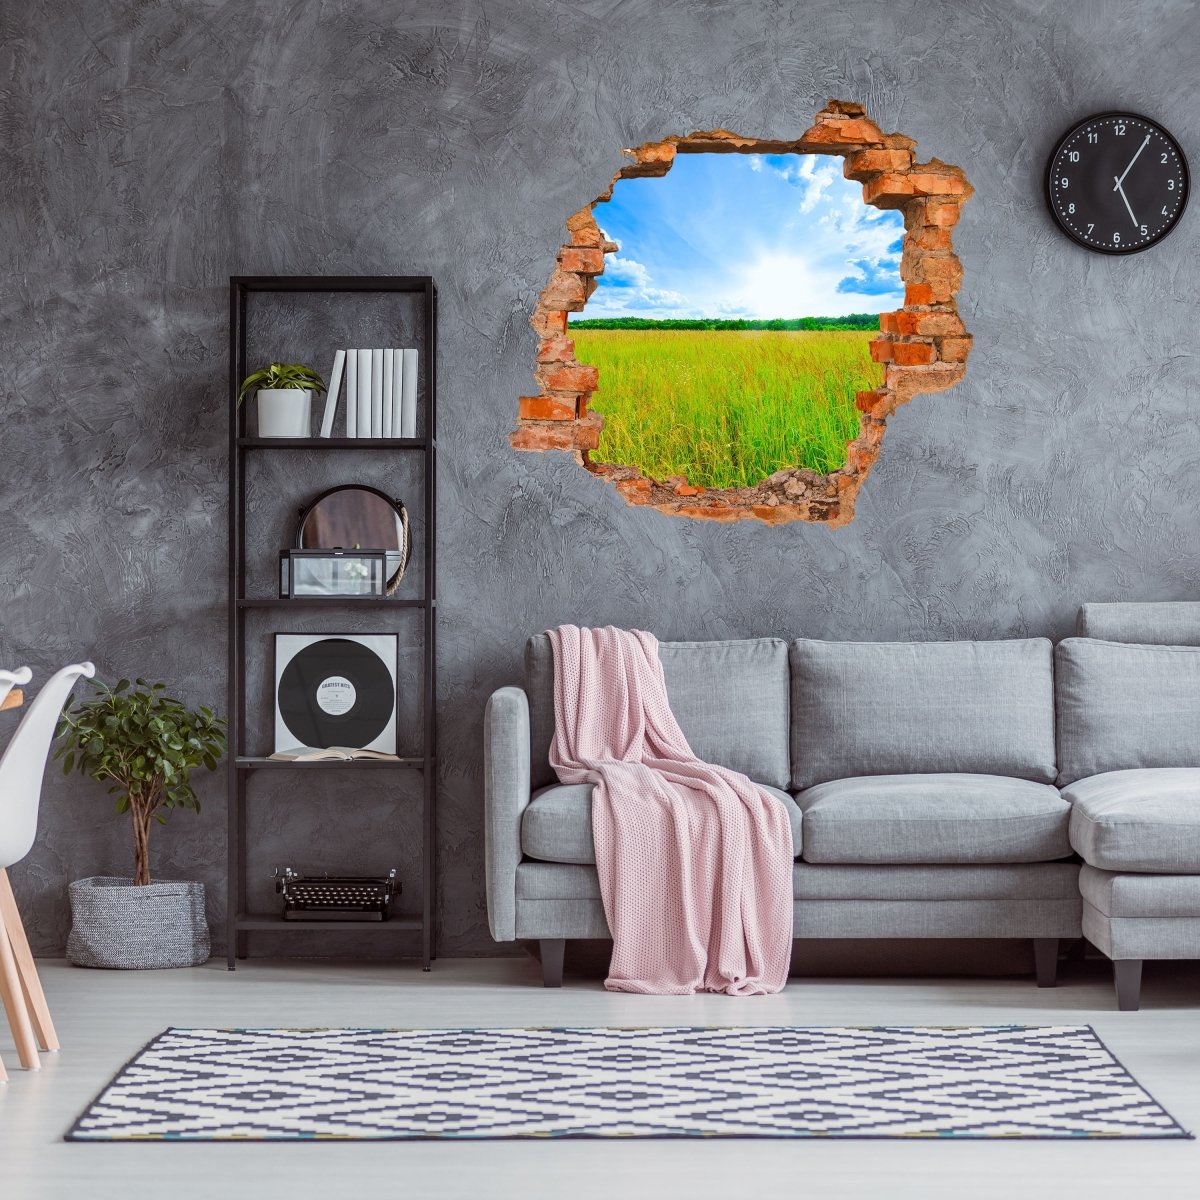 3D wall sticker field in summer, sun, sky, forest - Wall Decal M1157